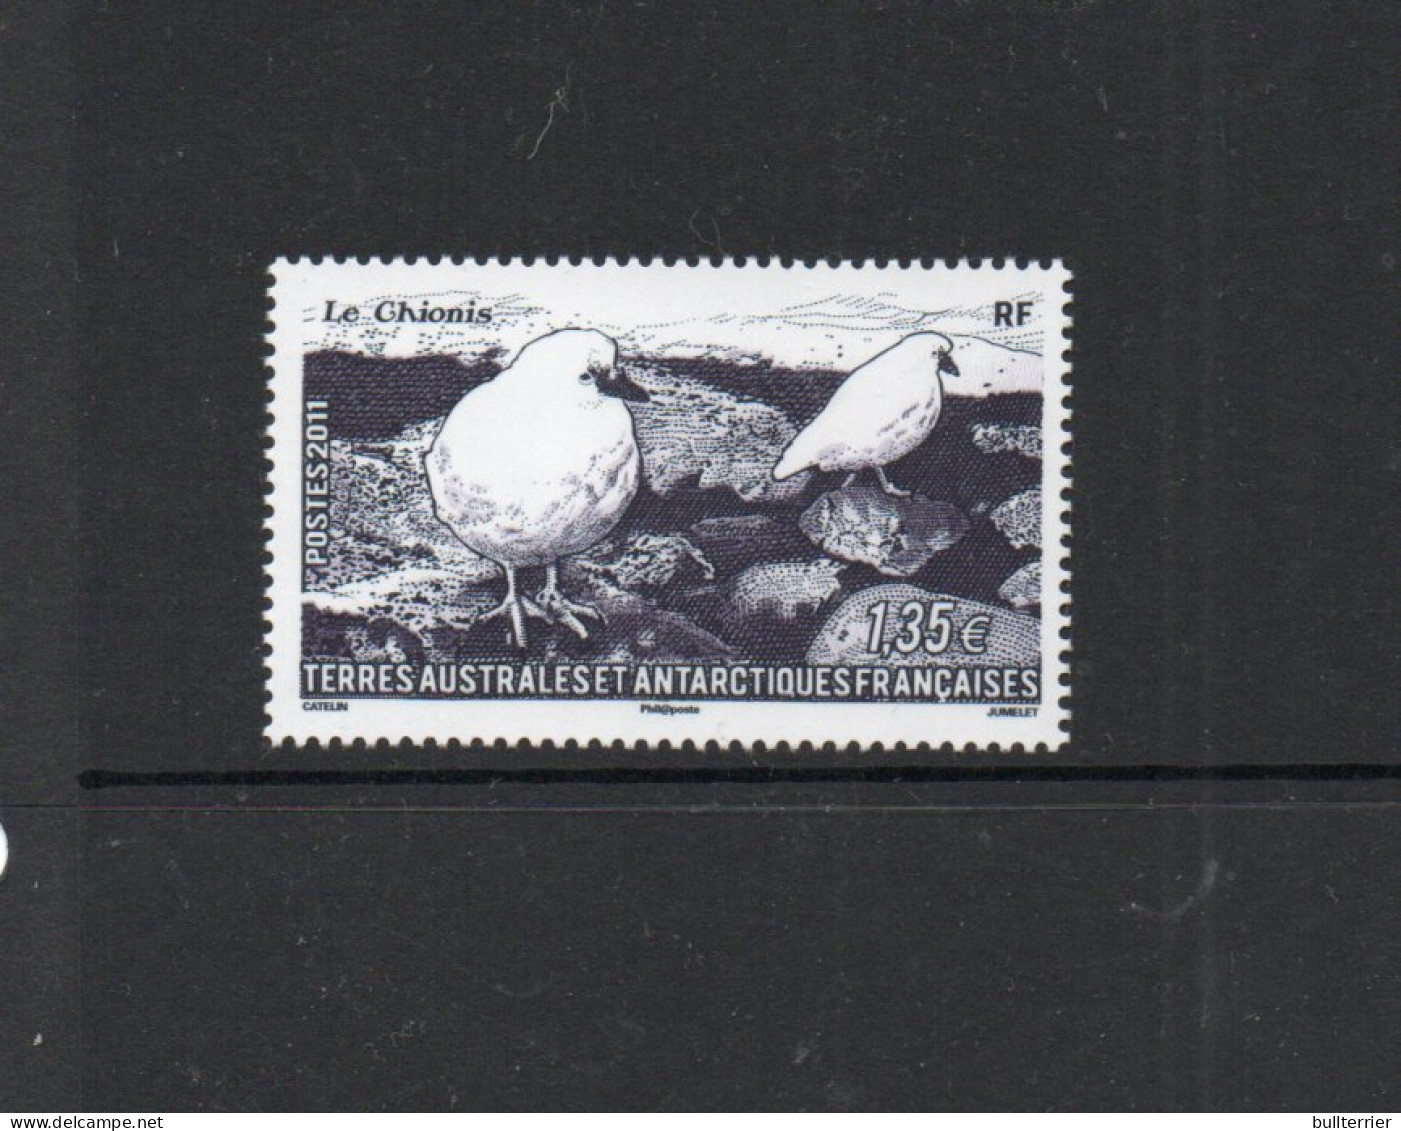 BIRDS - FRENCH ANTARCTIC TERRITORY - 2011 - ANTARCTC BIRDS  MINT NEVER HINGED, SG CAT £10.50 - Meeuwen